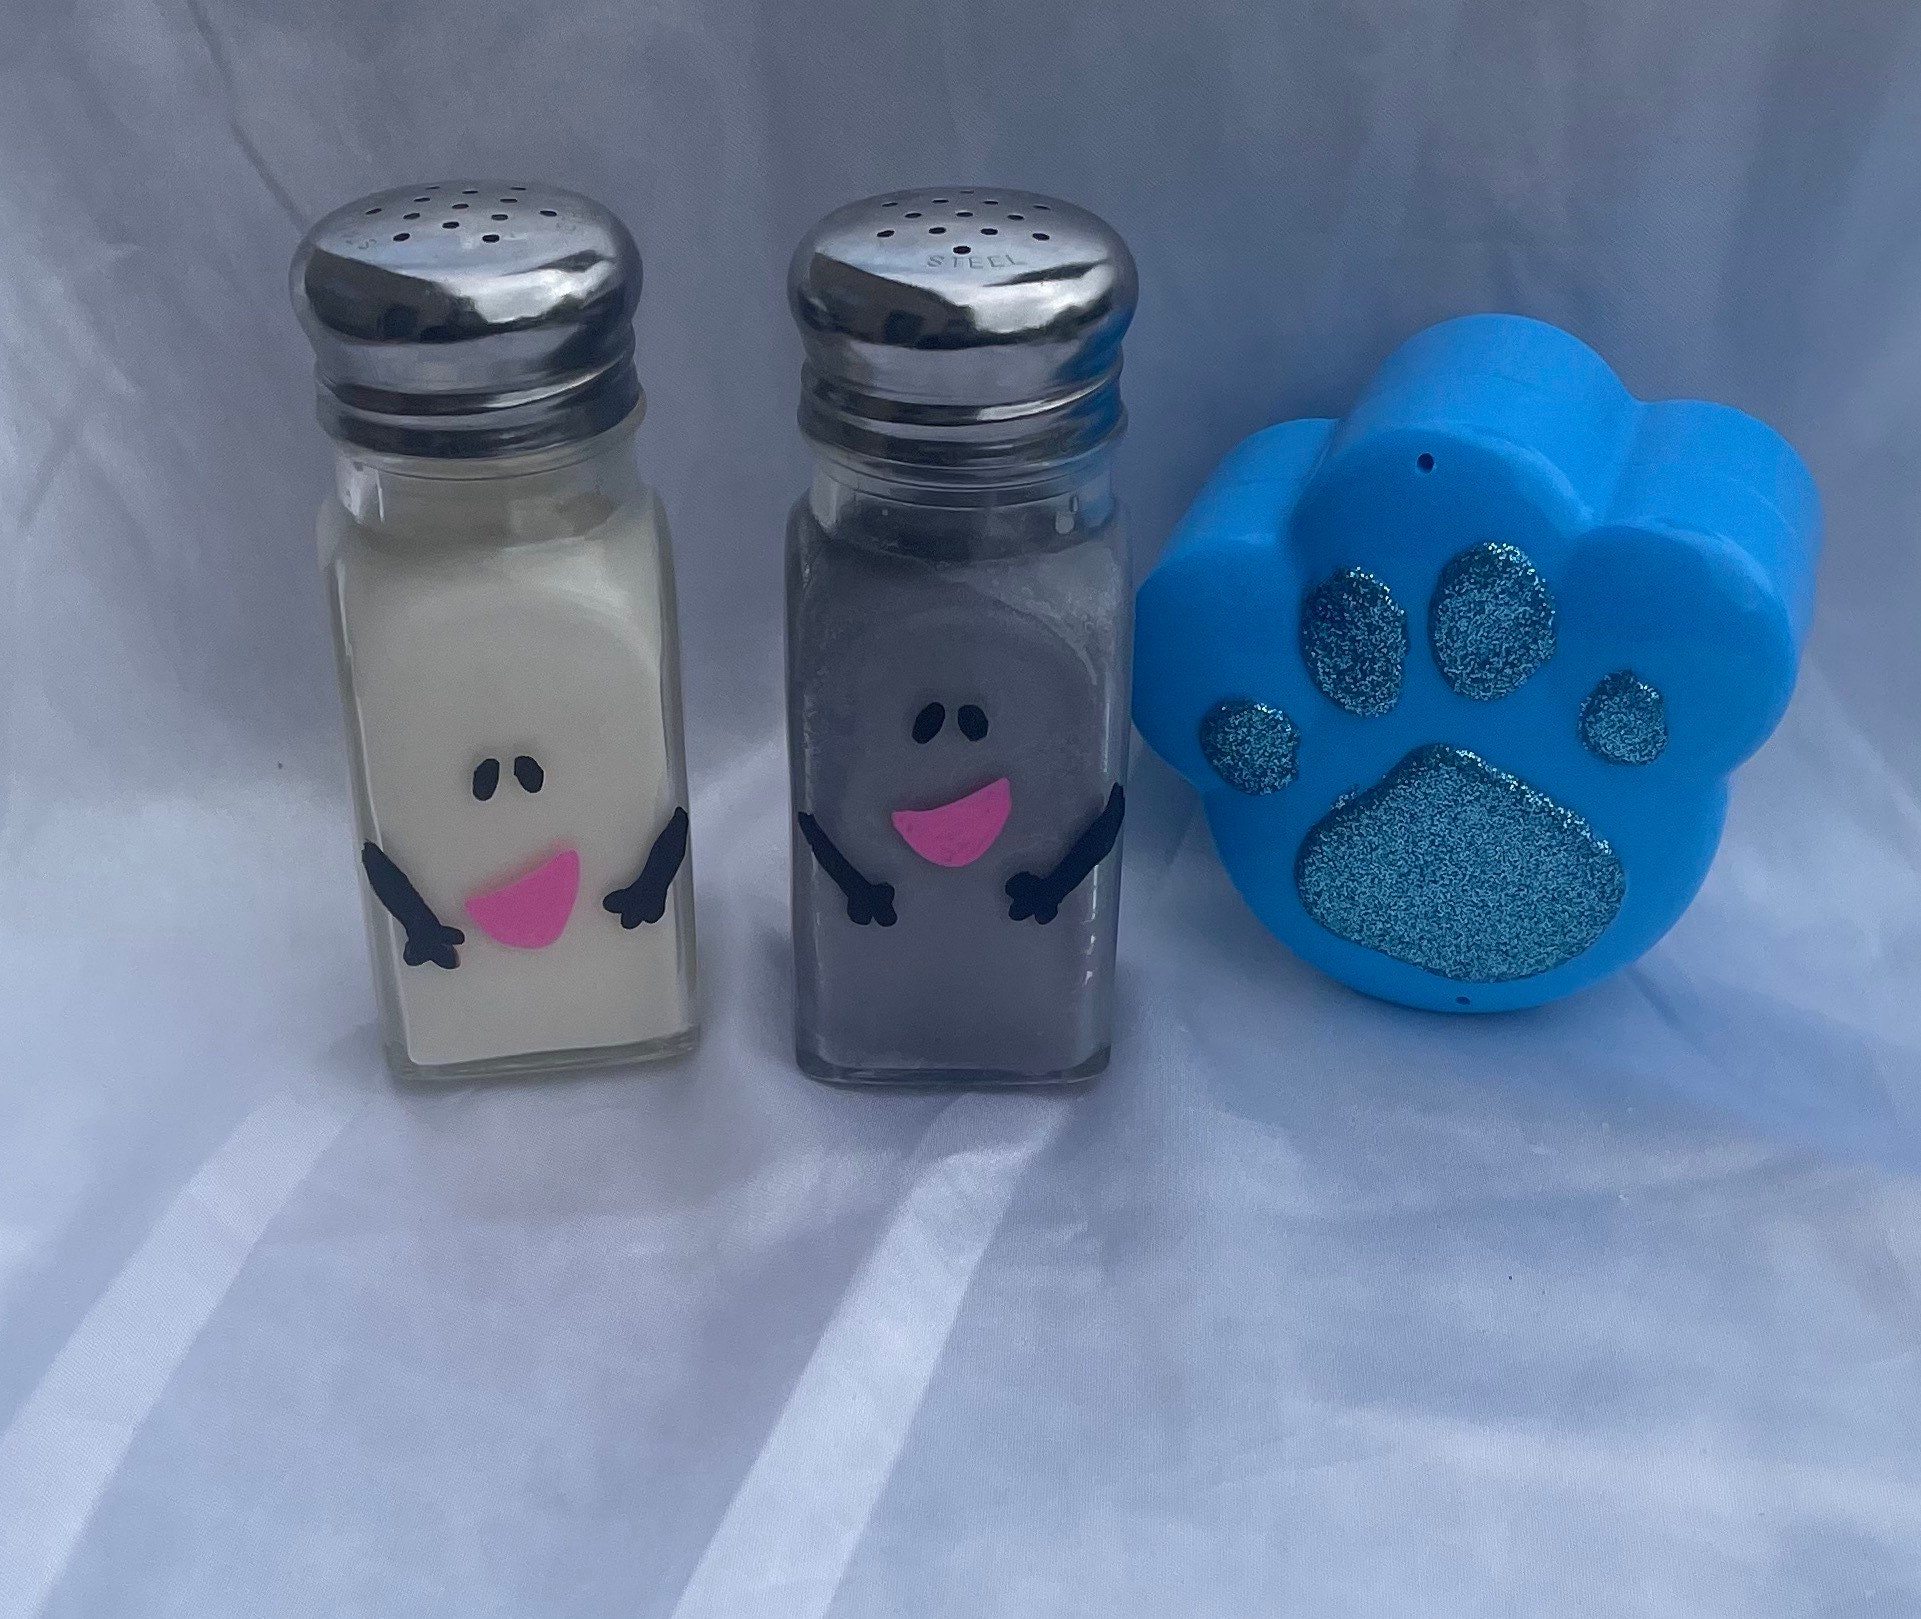 Blue Clues Salt and Pepper Shaker Candles